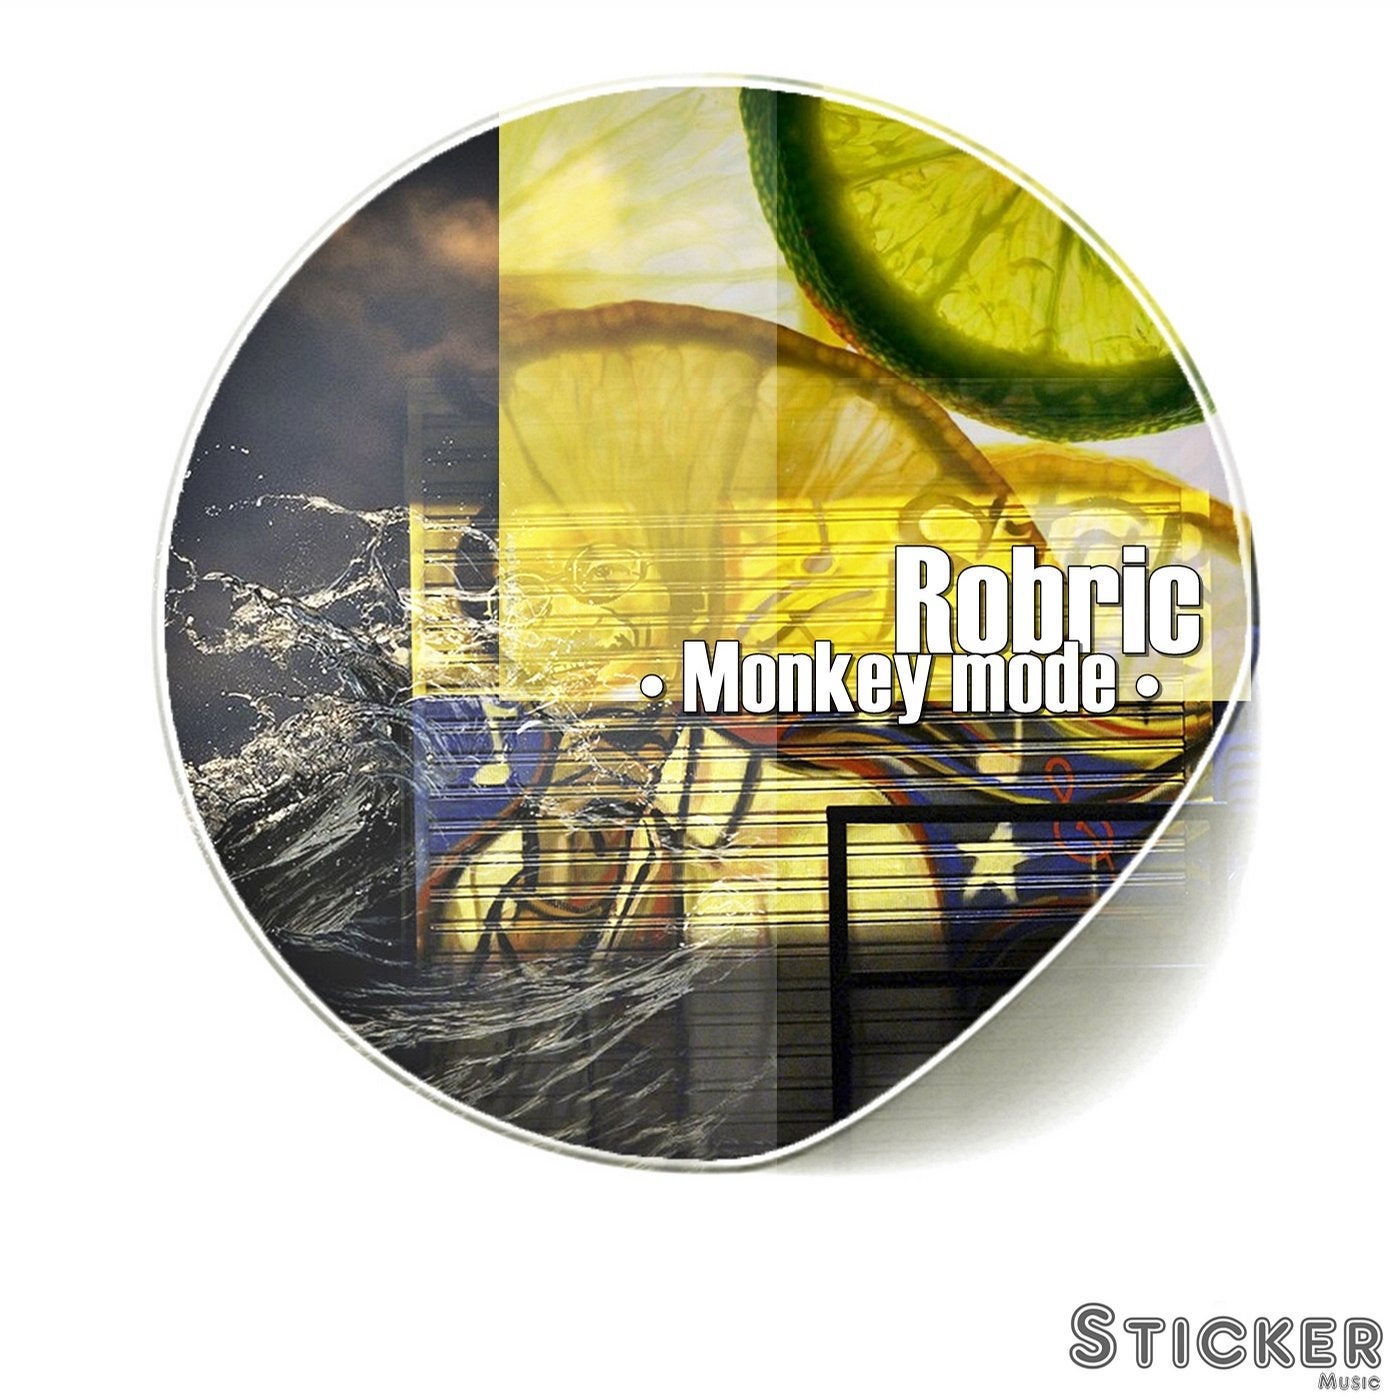 Monkey mode